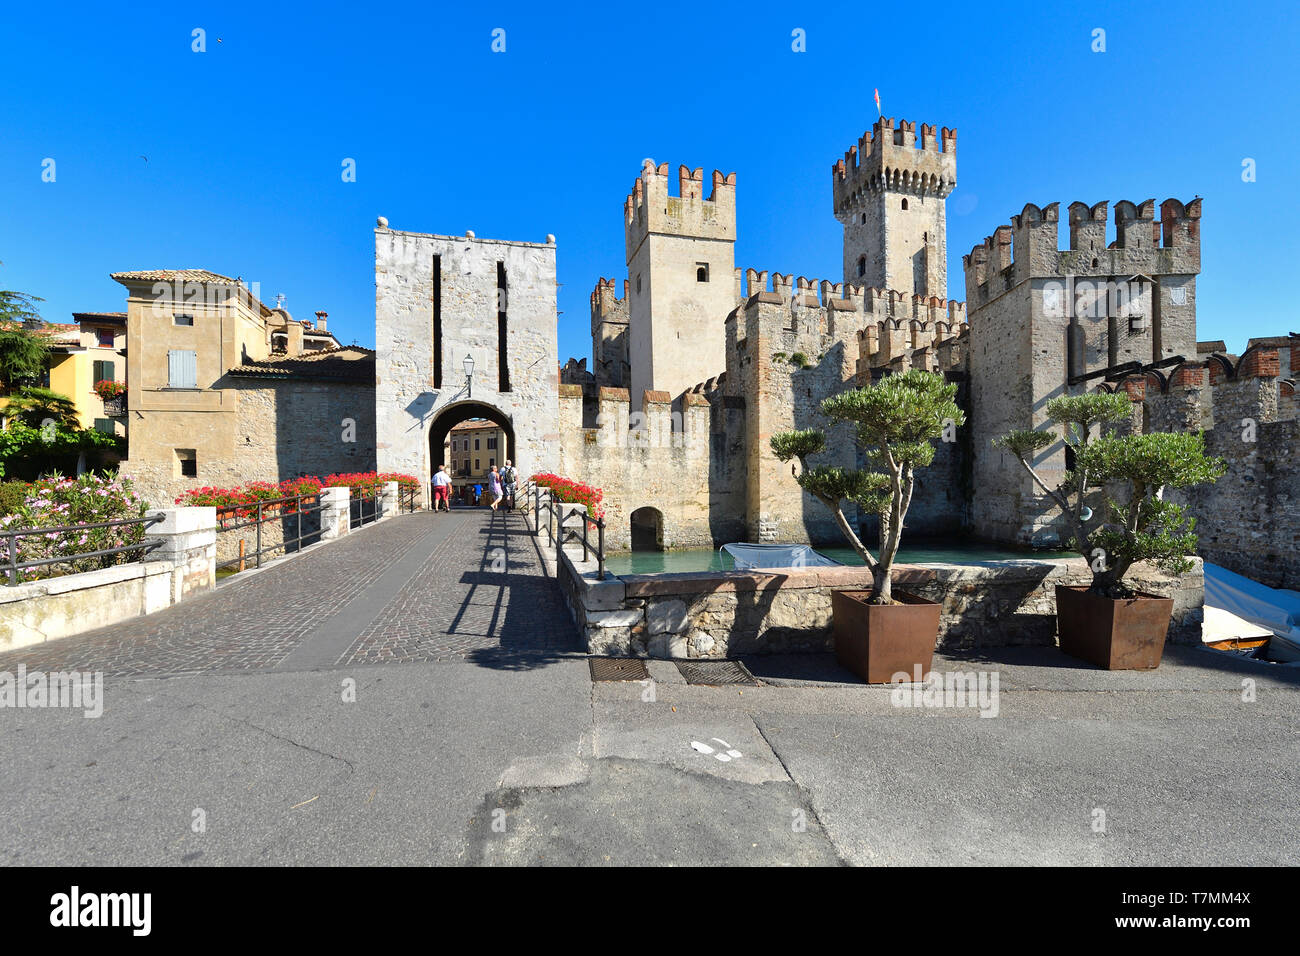 Italy, Lombardy, Lake Garda, Sirmione, the castle of Rocca Scaligieri Stock Photo